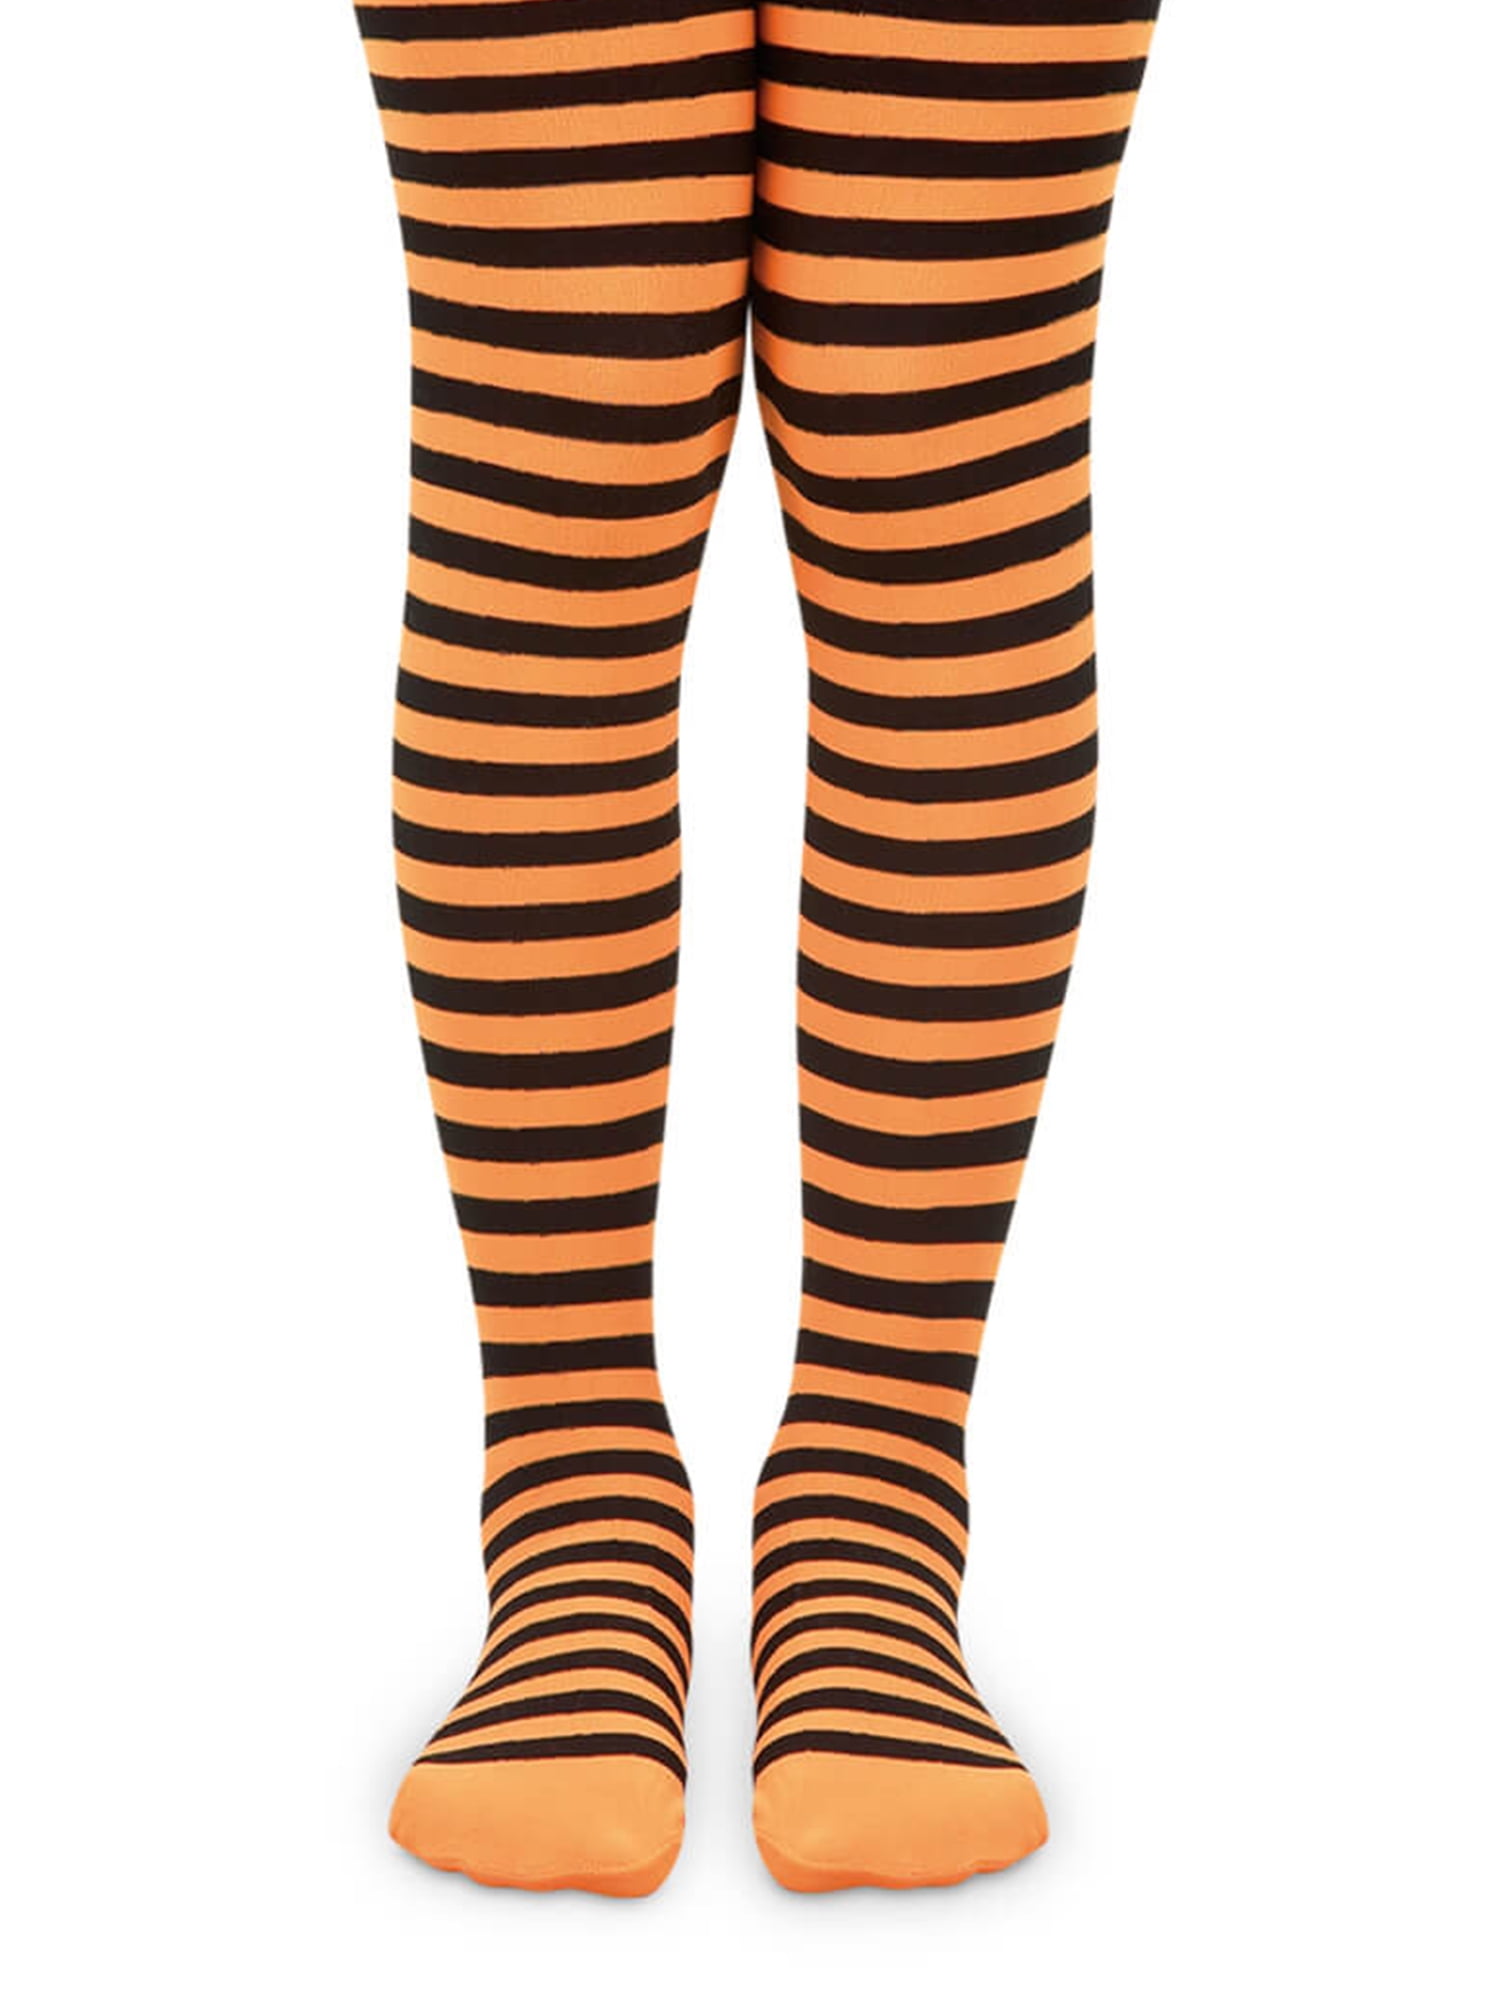 Jefferies Socks Girls Striped Tights 1-Pack, Sizes S-L 